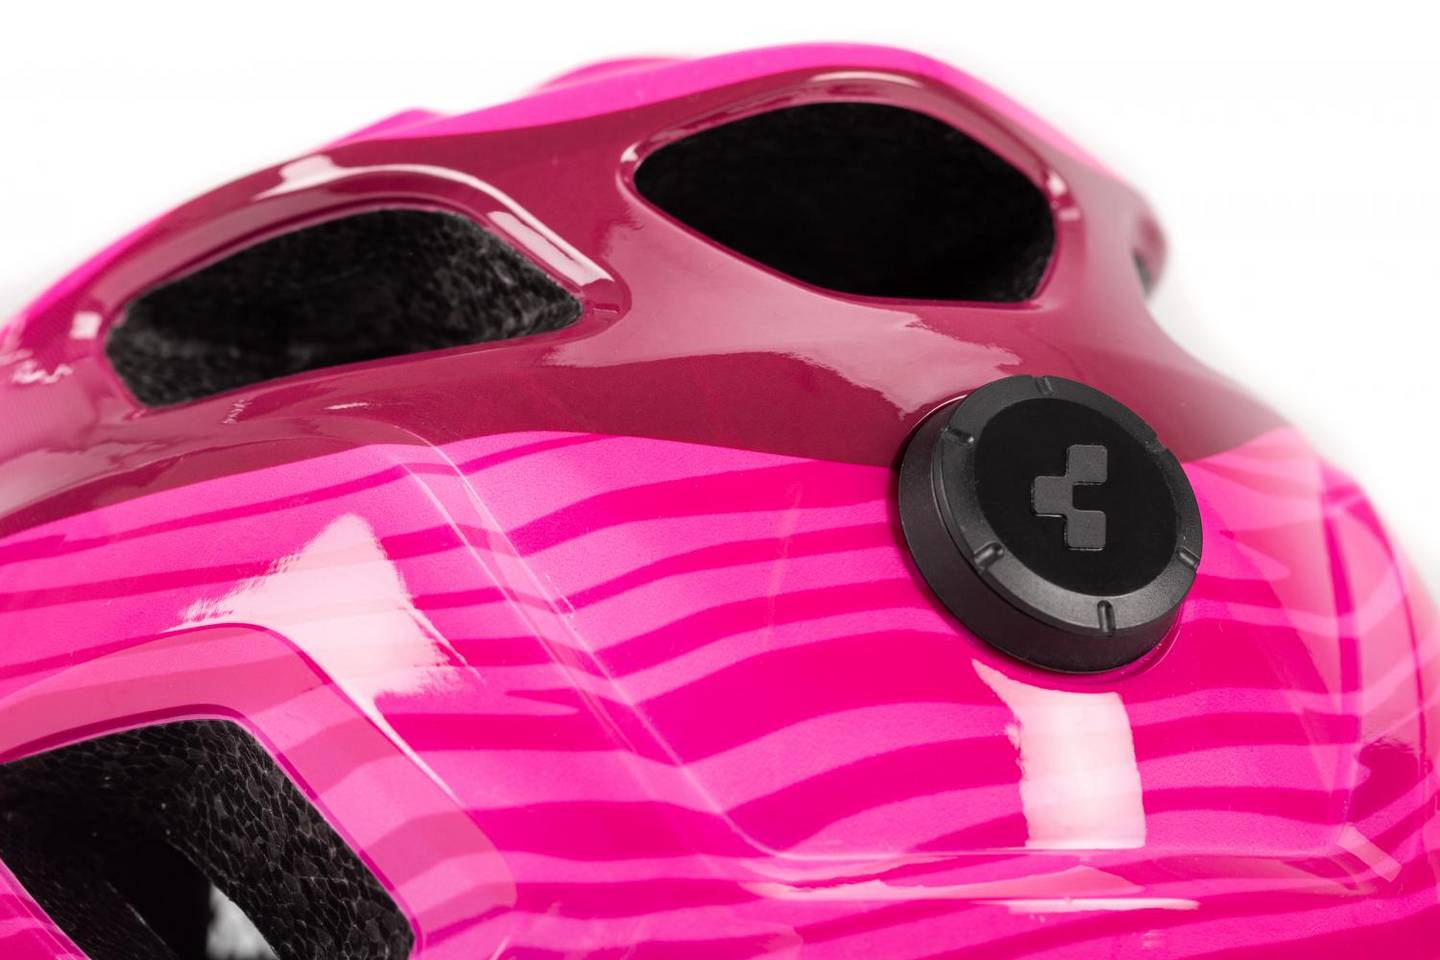 CUBE Helm FINK  / pink S (49-55)